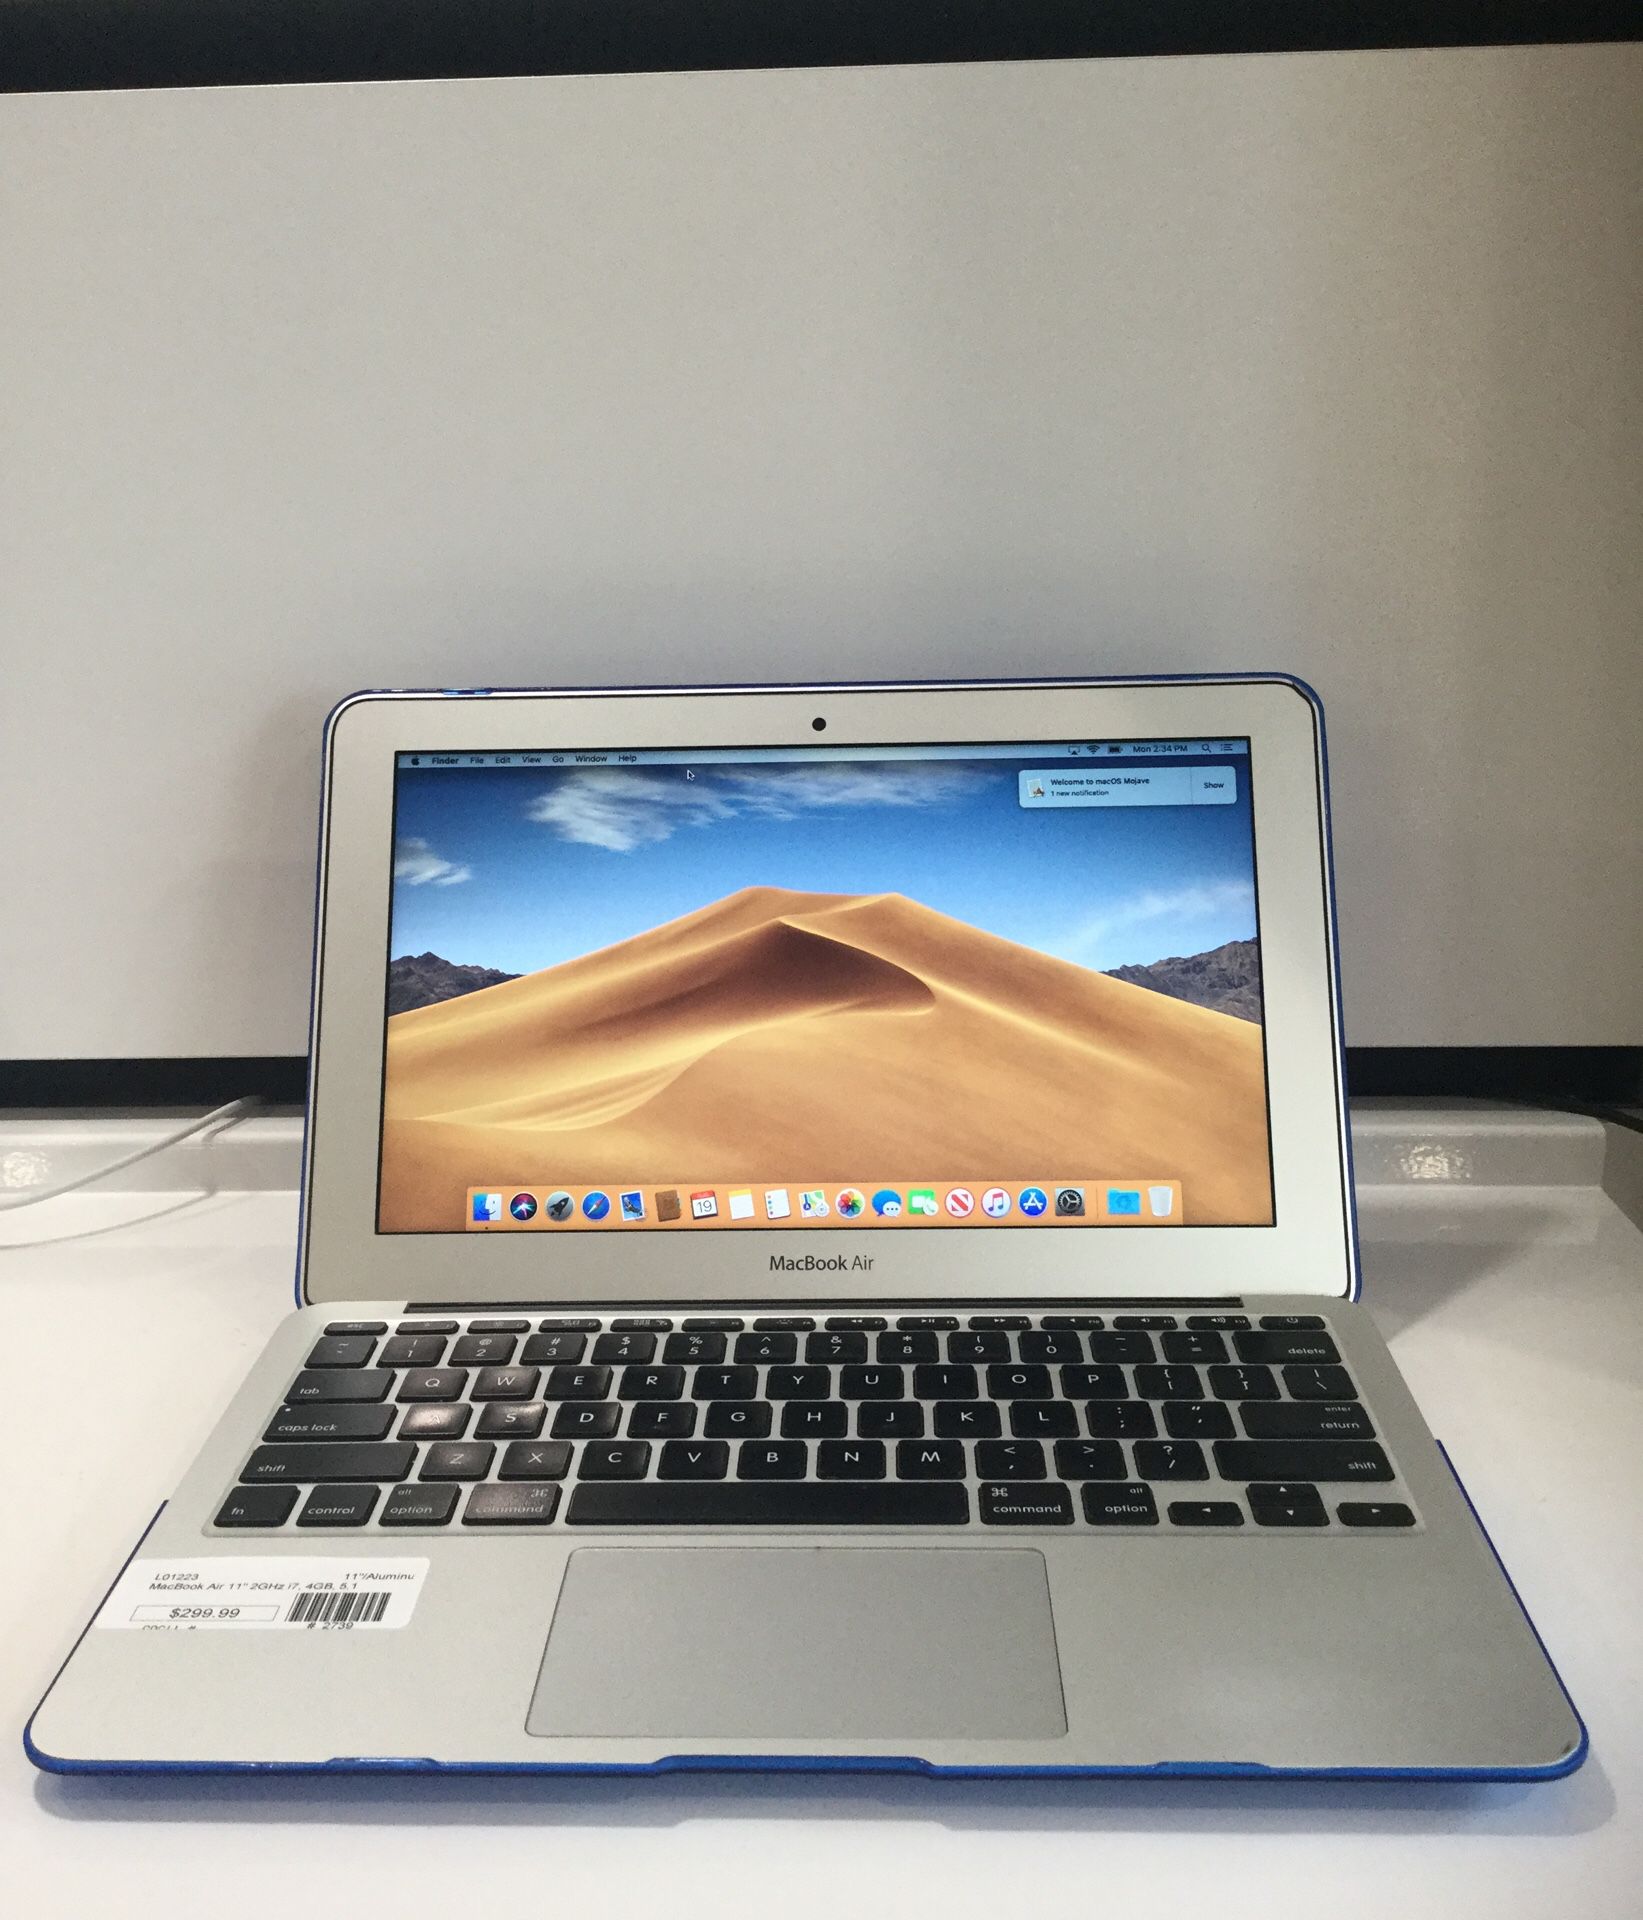 MacBook Air 11” 2GHz i7, 4GB